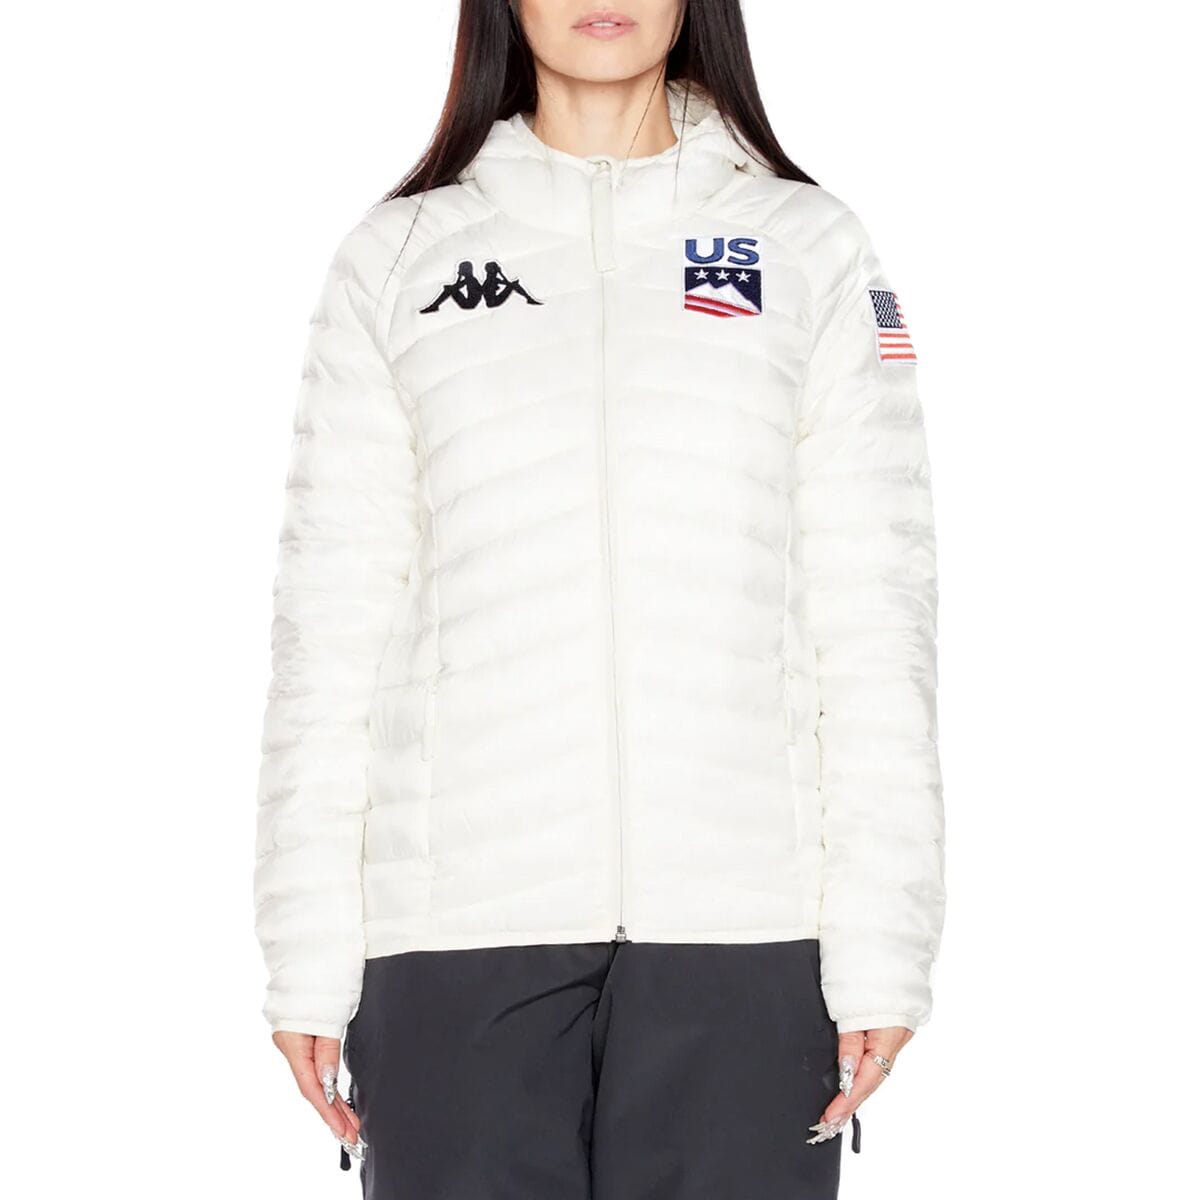 6cento 663 куртка сша Kappa Usa, белый kappa футболка для девочек kappa размер 140